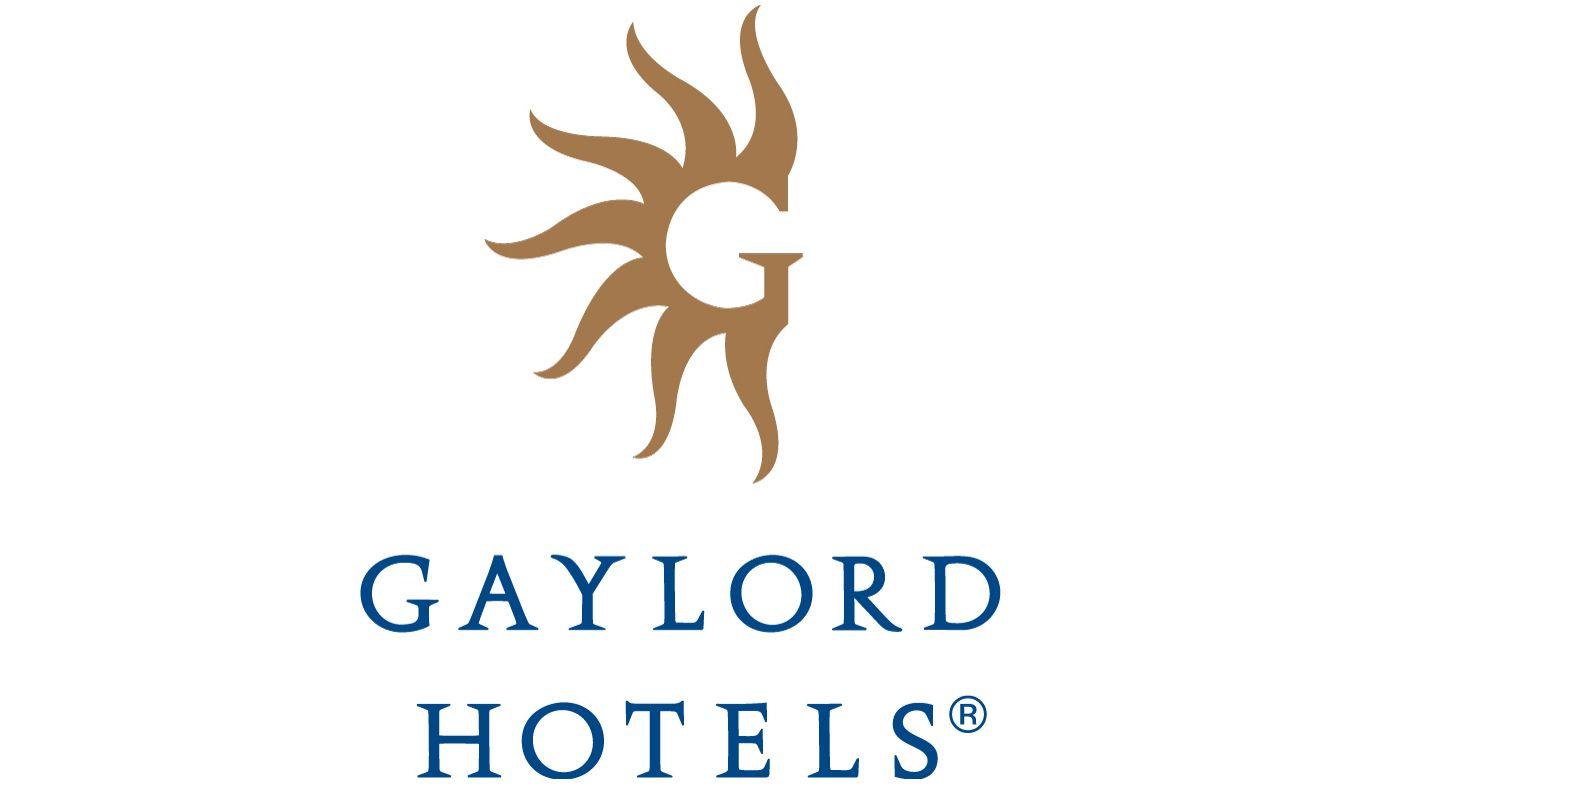 Hotels Logo - Brand Photos & Logos | Marriott News Center